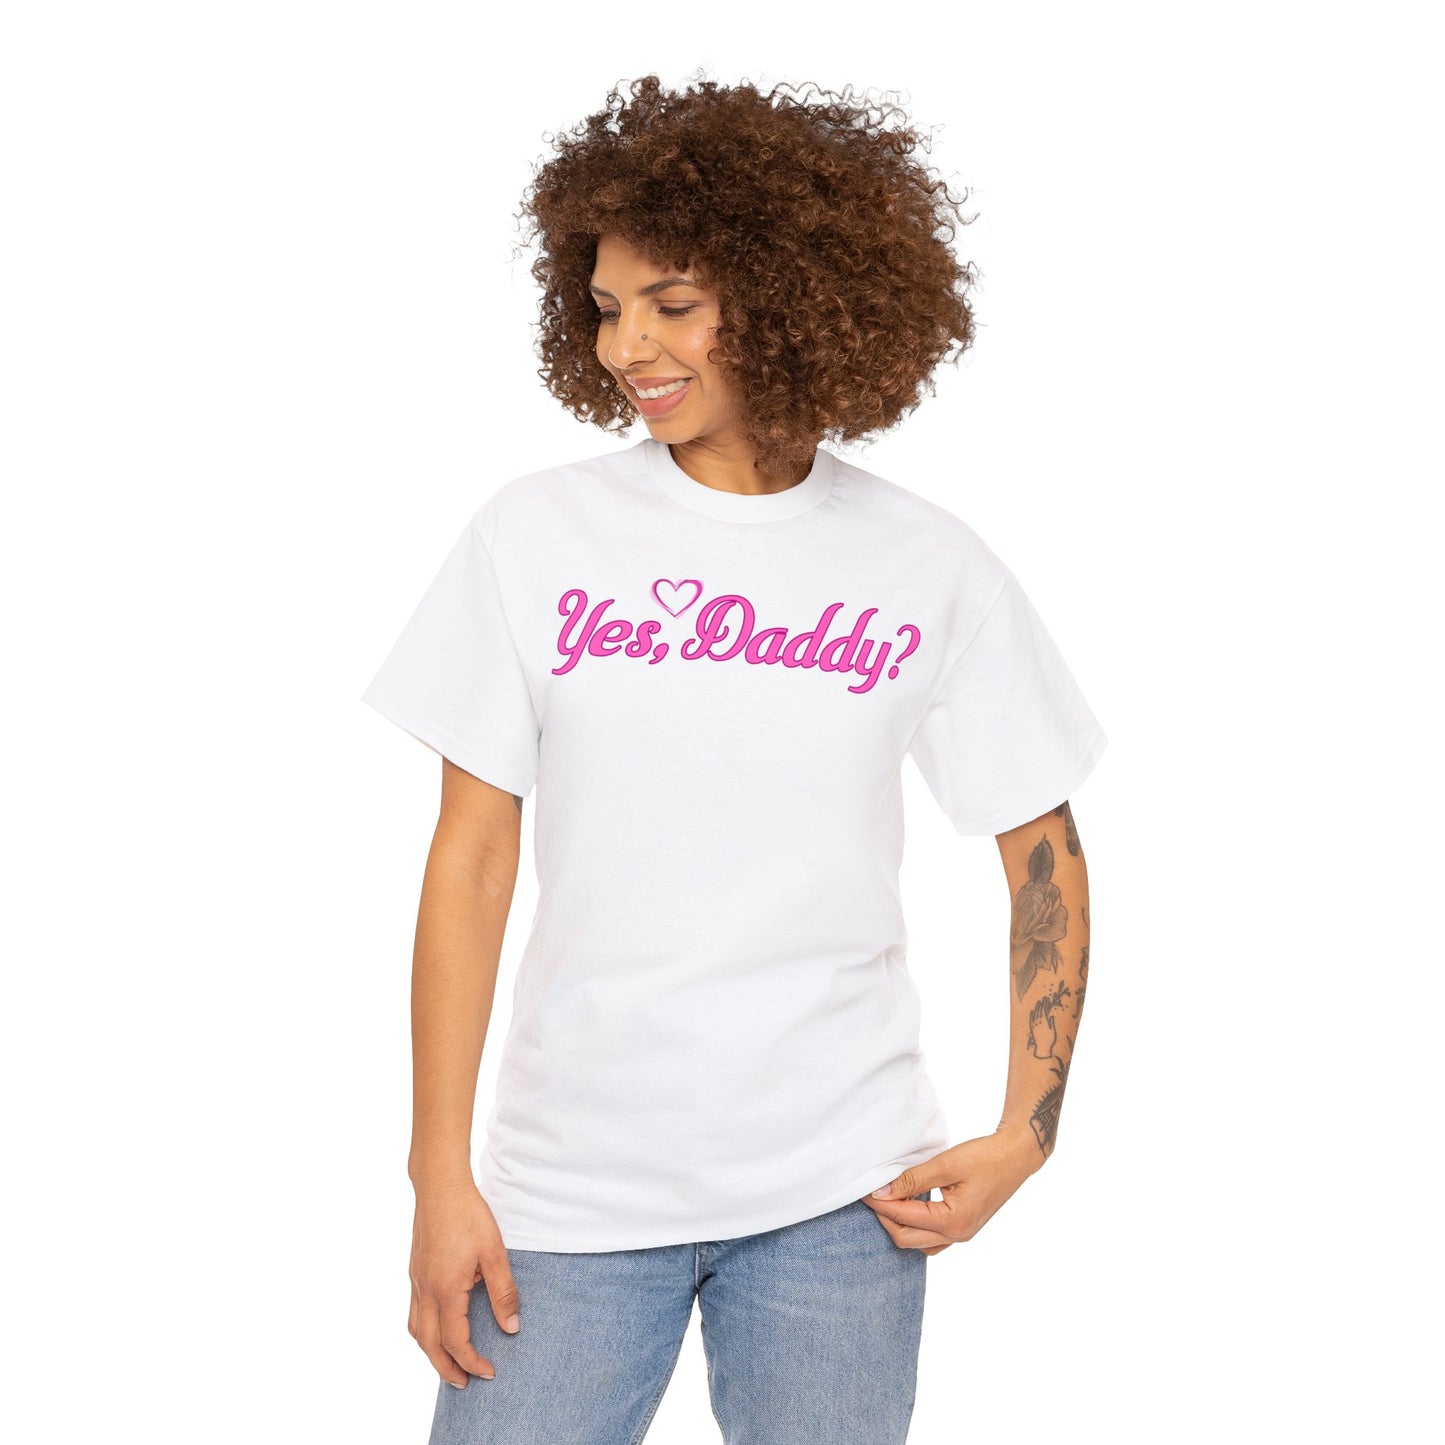 Yes Daddy Shirt | Adult Shirt | Sexy Shirt | BDSM Shirt | Kinky Shirt | BDSM Clothing | Submissive Clothing | DDlg | Dominant Shirt